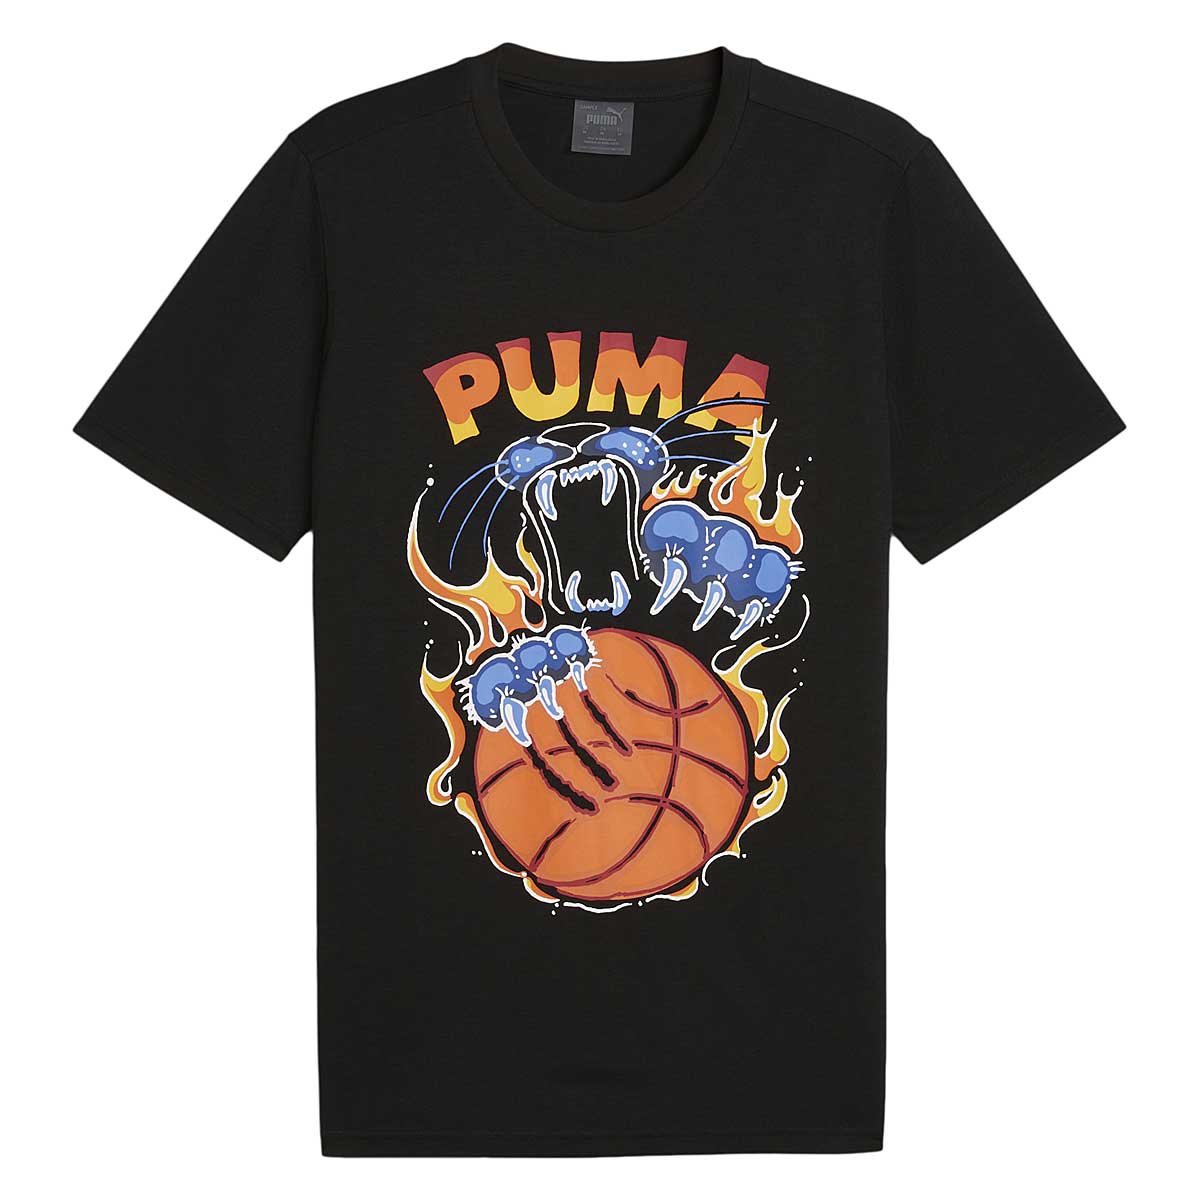 Puma Tsa T-shirt 6, Schwarz L